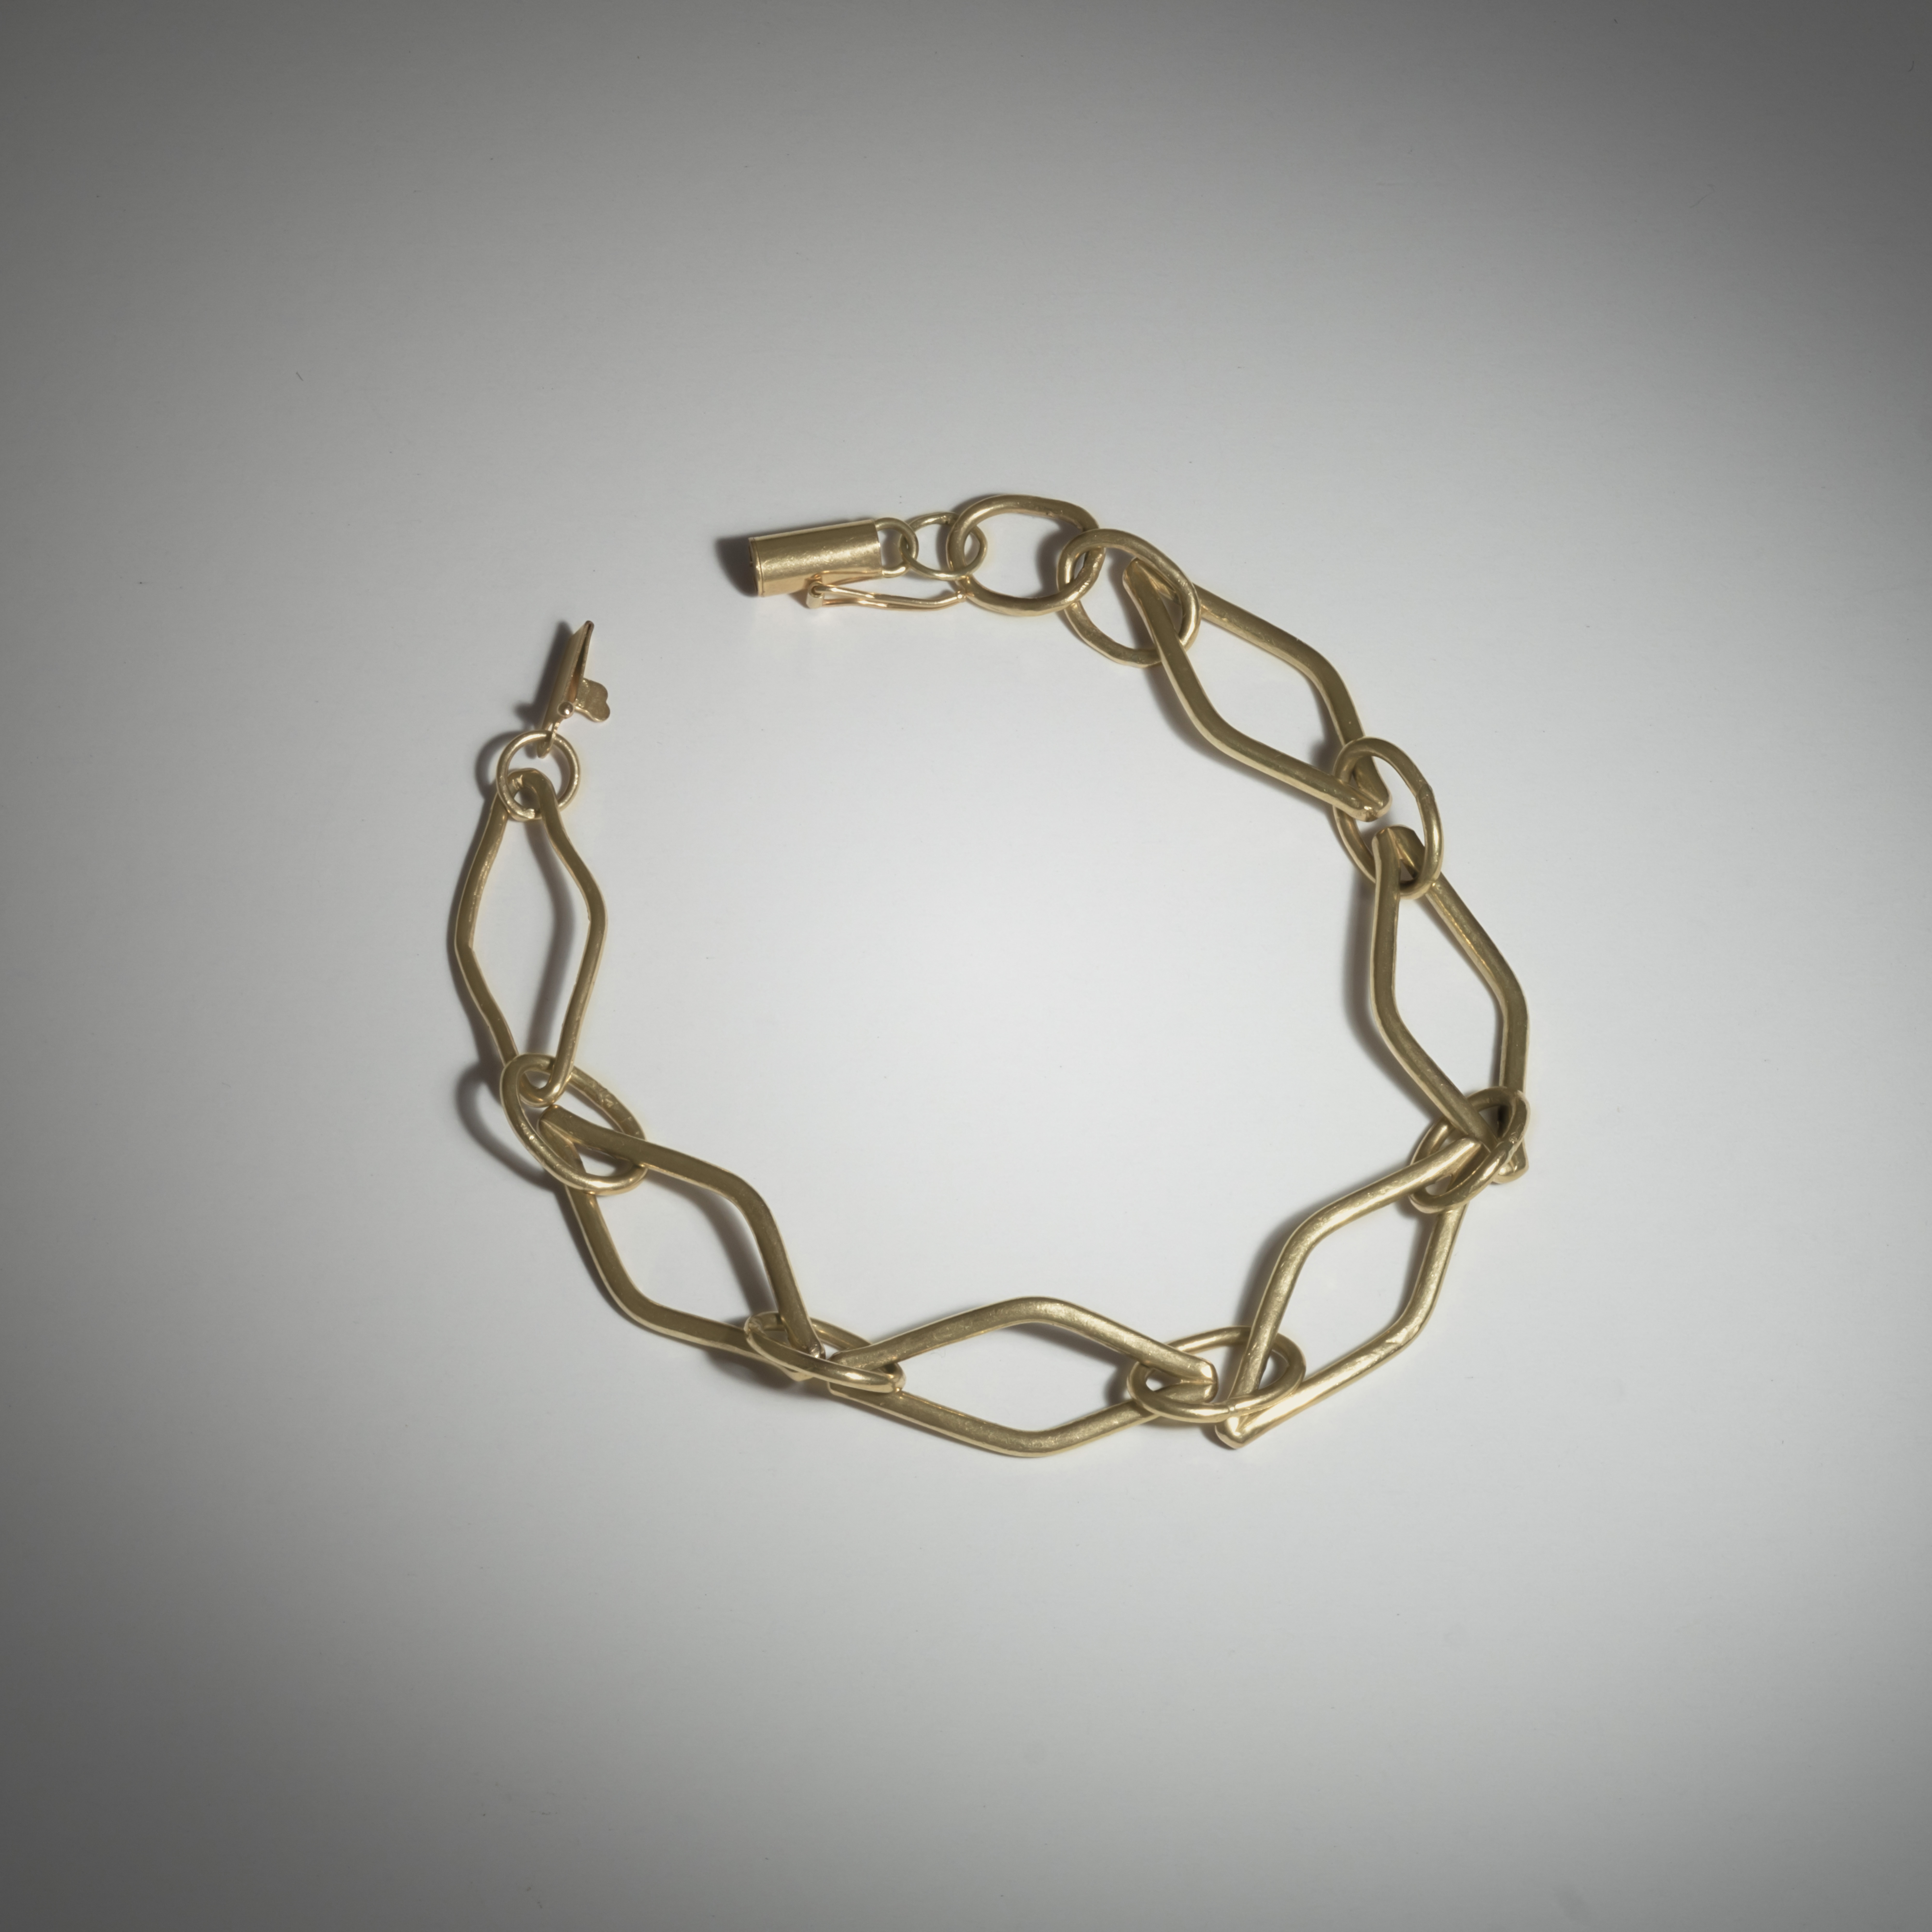 Agave link 18k yellow gold bracelet